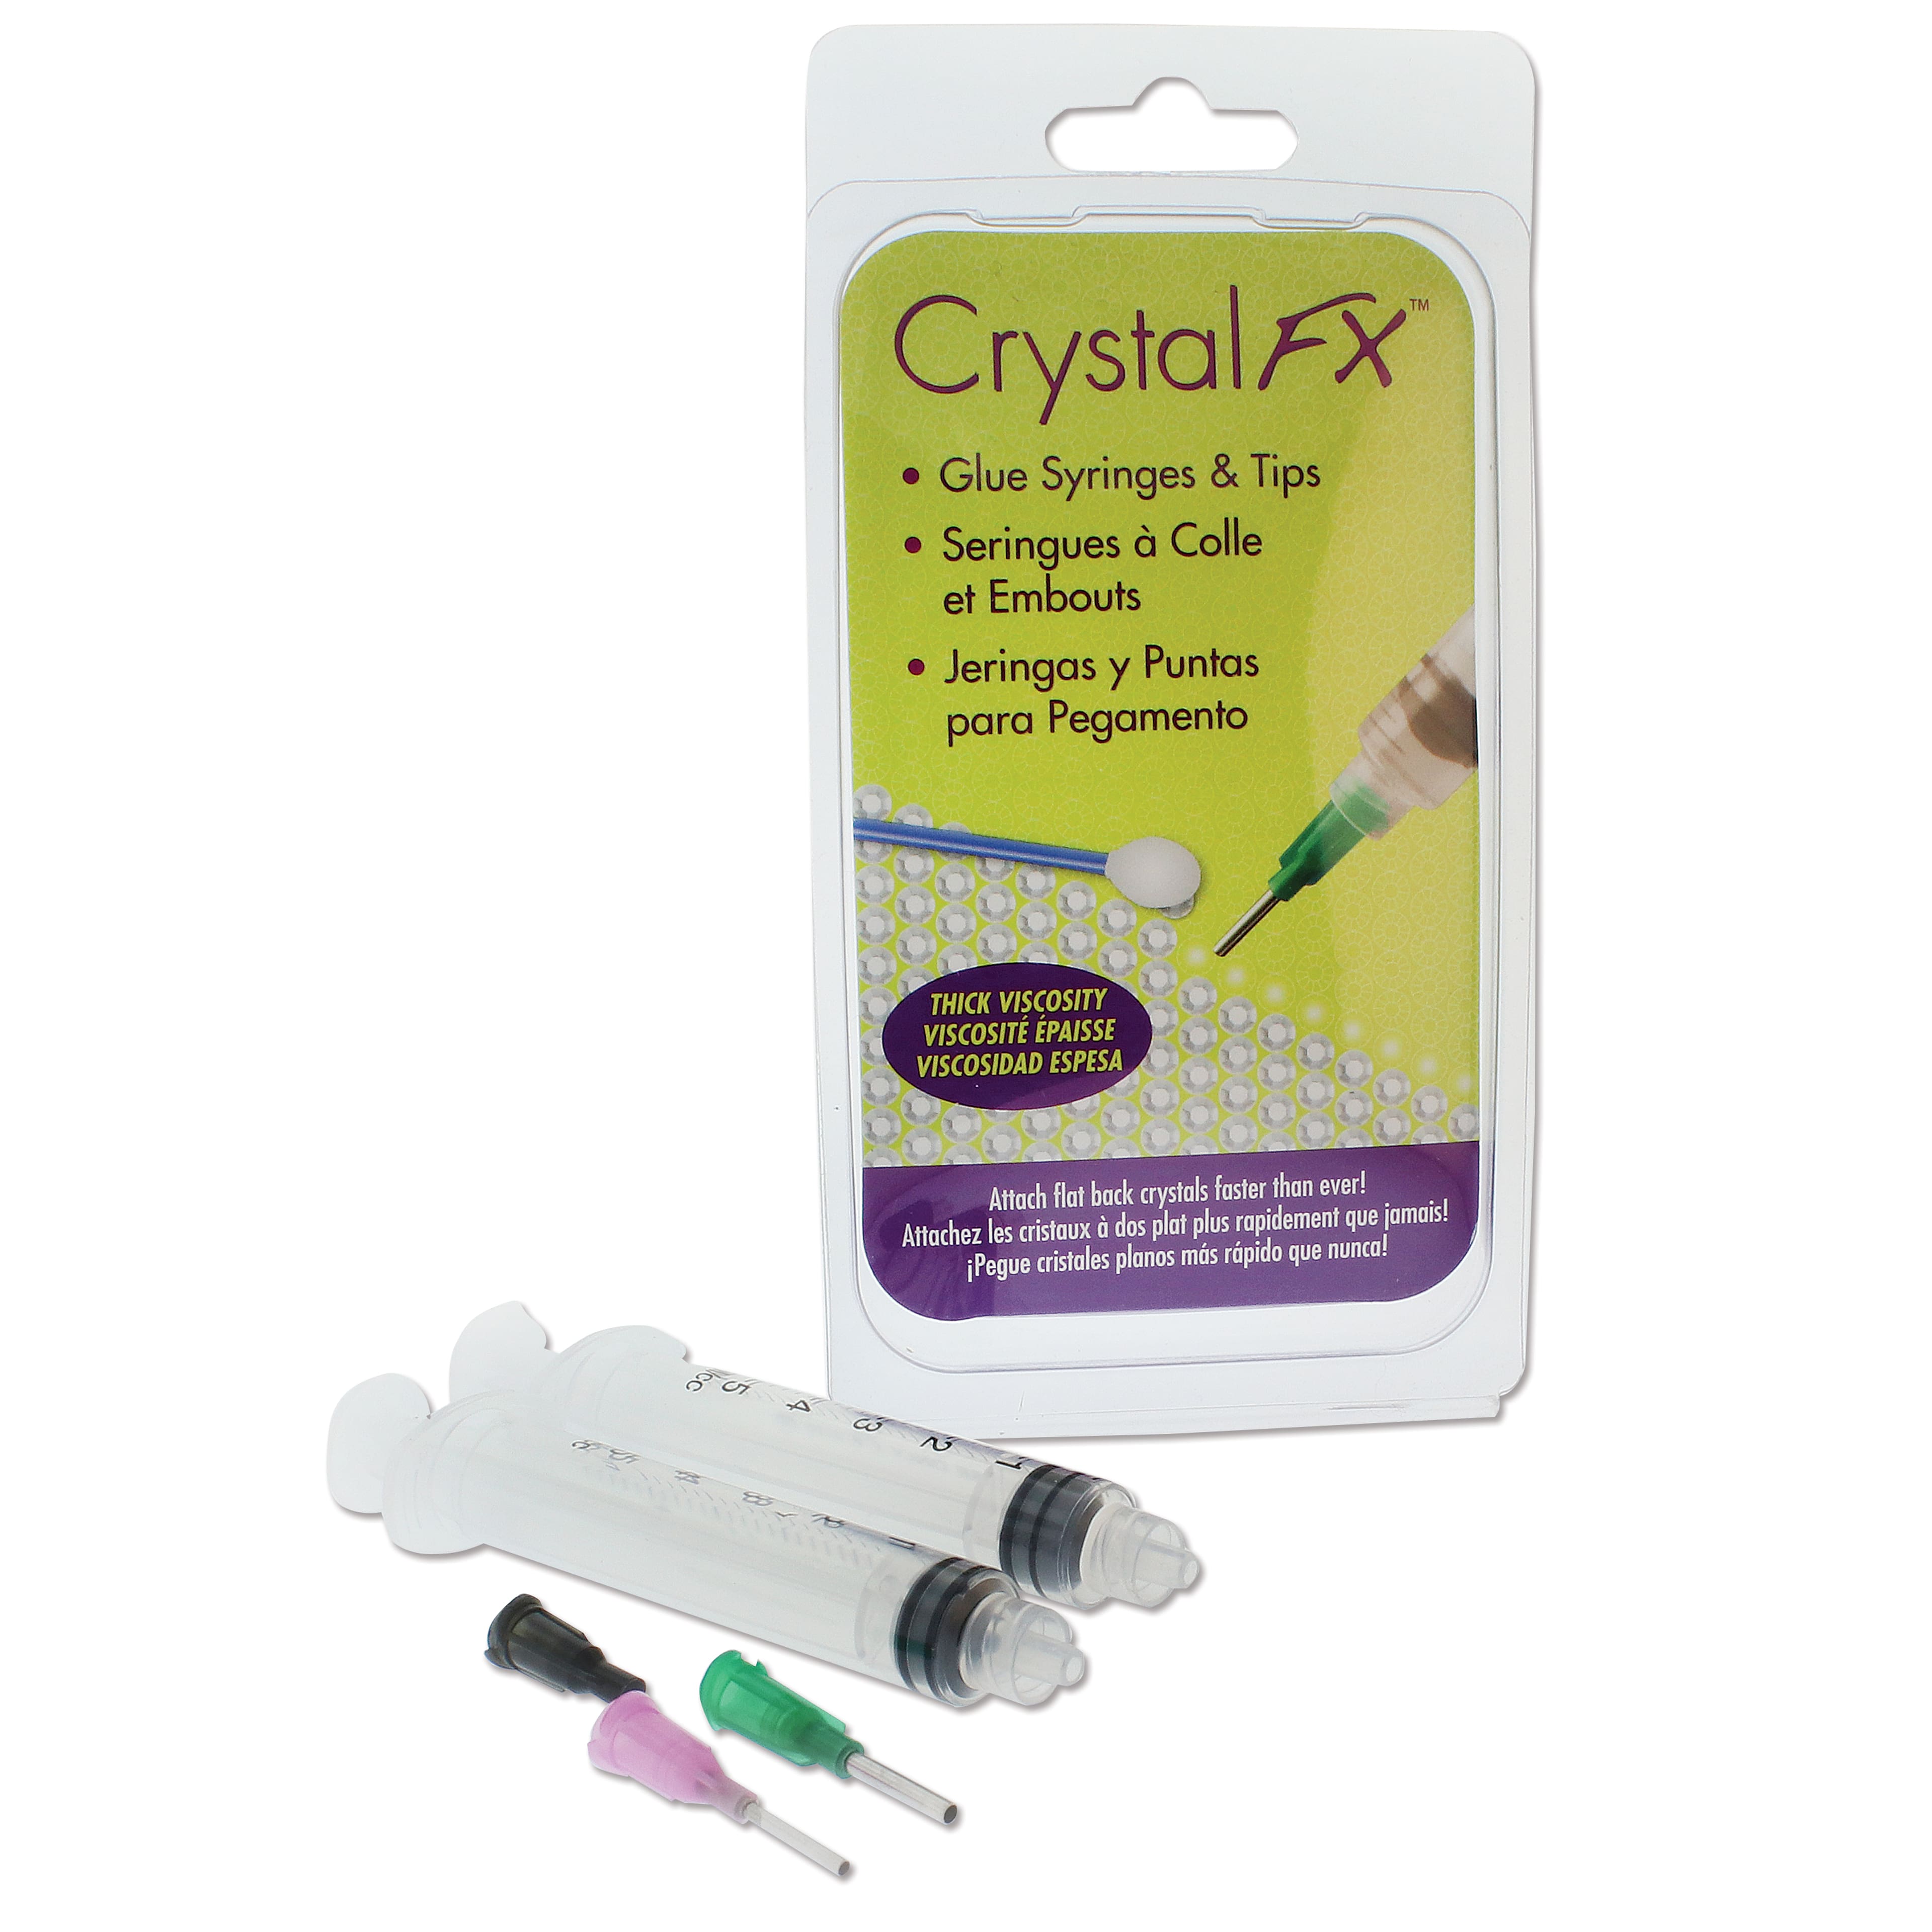 DCT, Wood Glue Applicator Glue Syringe and Tips – 20 mL Syringe Glue  Applicator